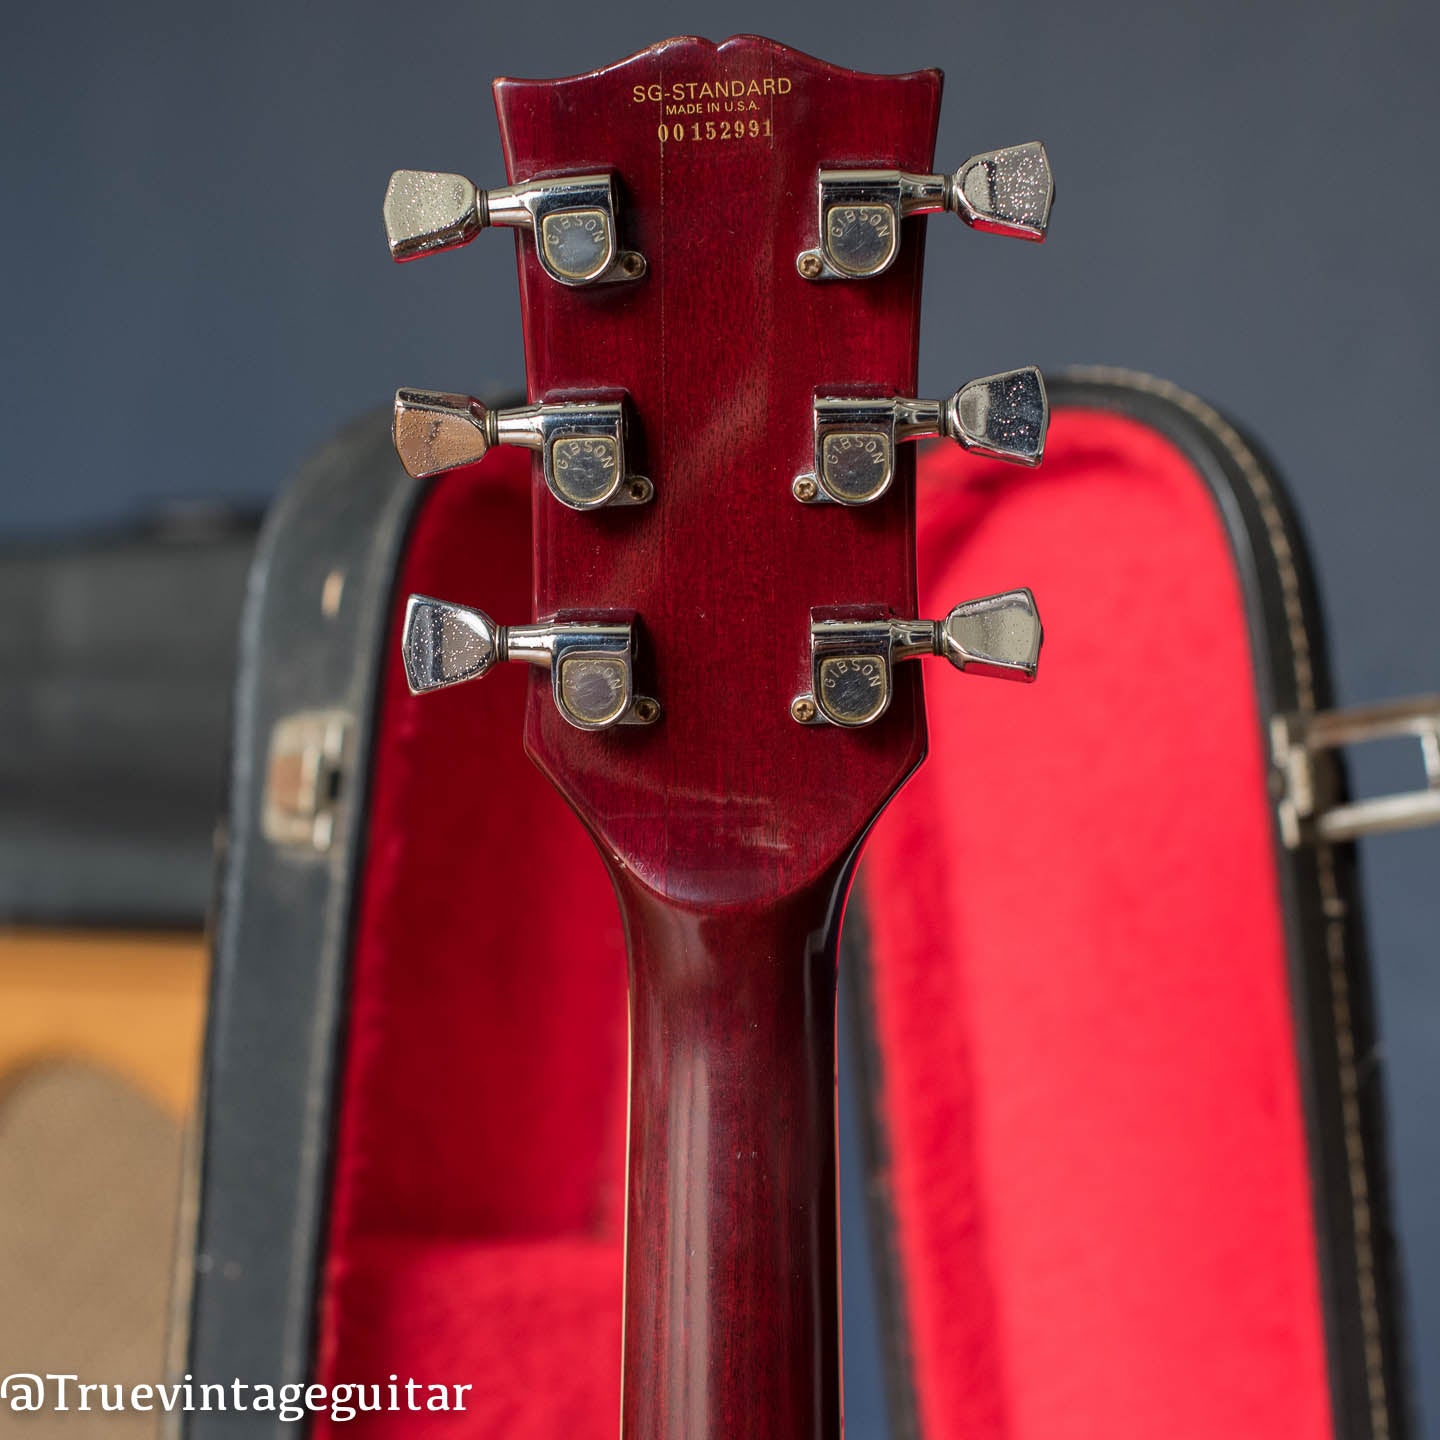 Gibson SG standard headstock, tuners